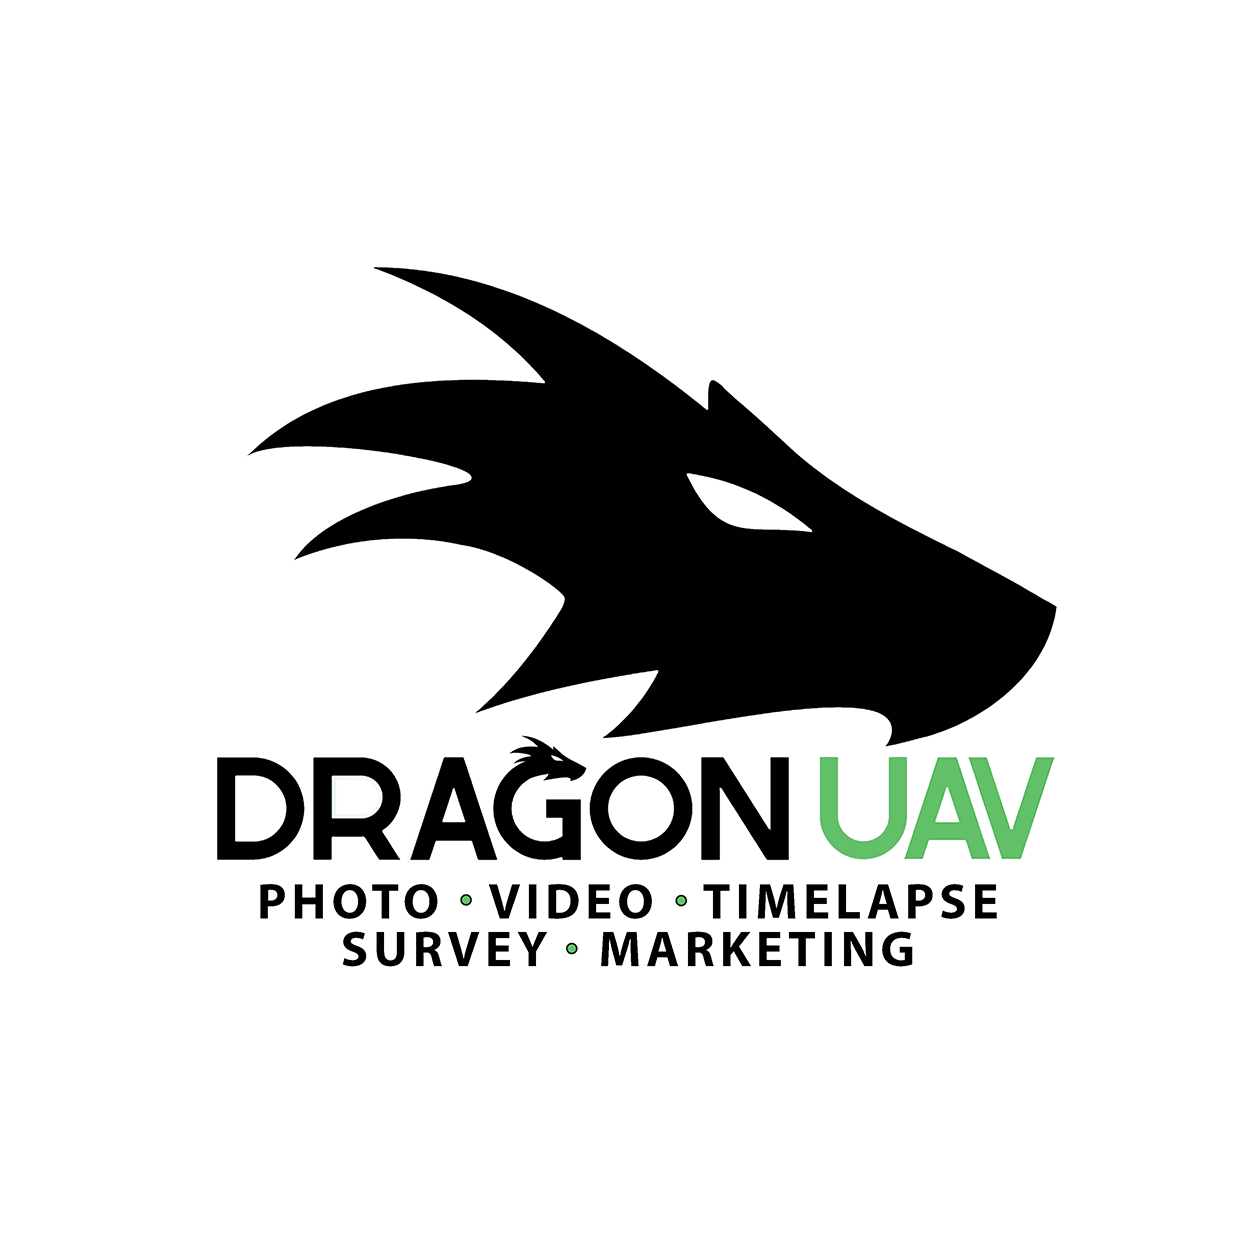 Dragon UAV Company Logo - Dragon Head with text "Photo, Video, timelapse, Survey, Marketing"